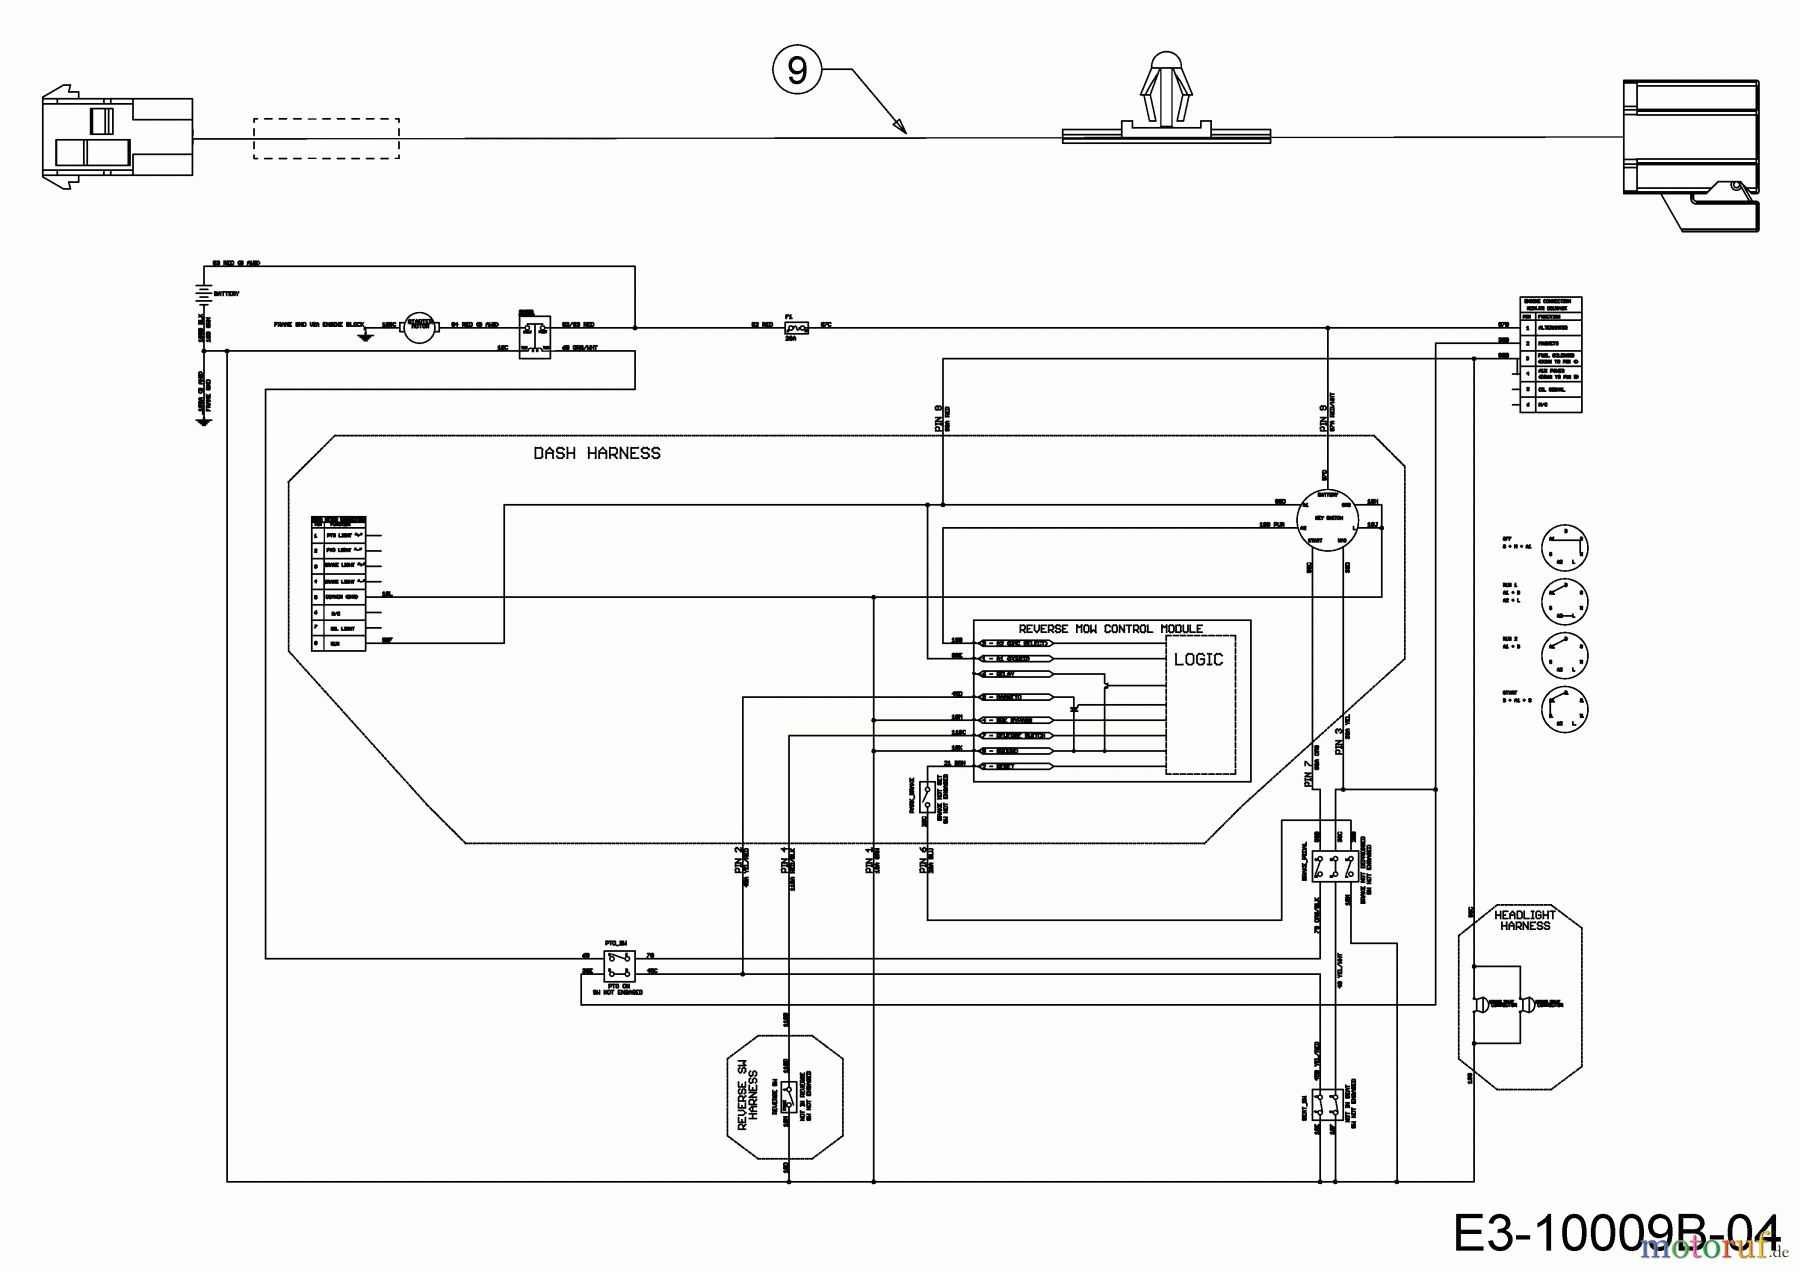  Greenbase Lawn tractors V 162 C 13A8A1KF618 (2019) Wiring diagram reverse